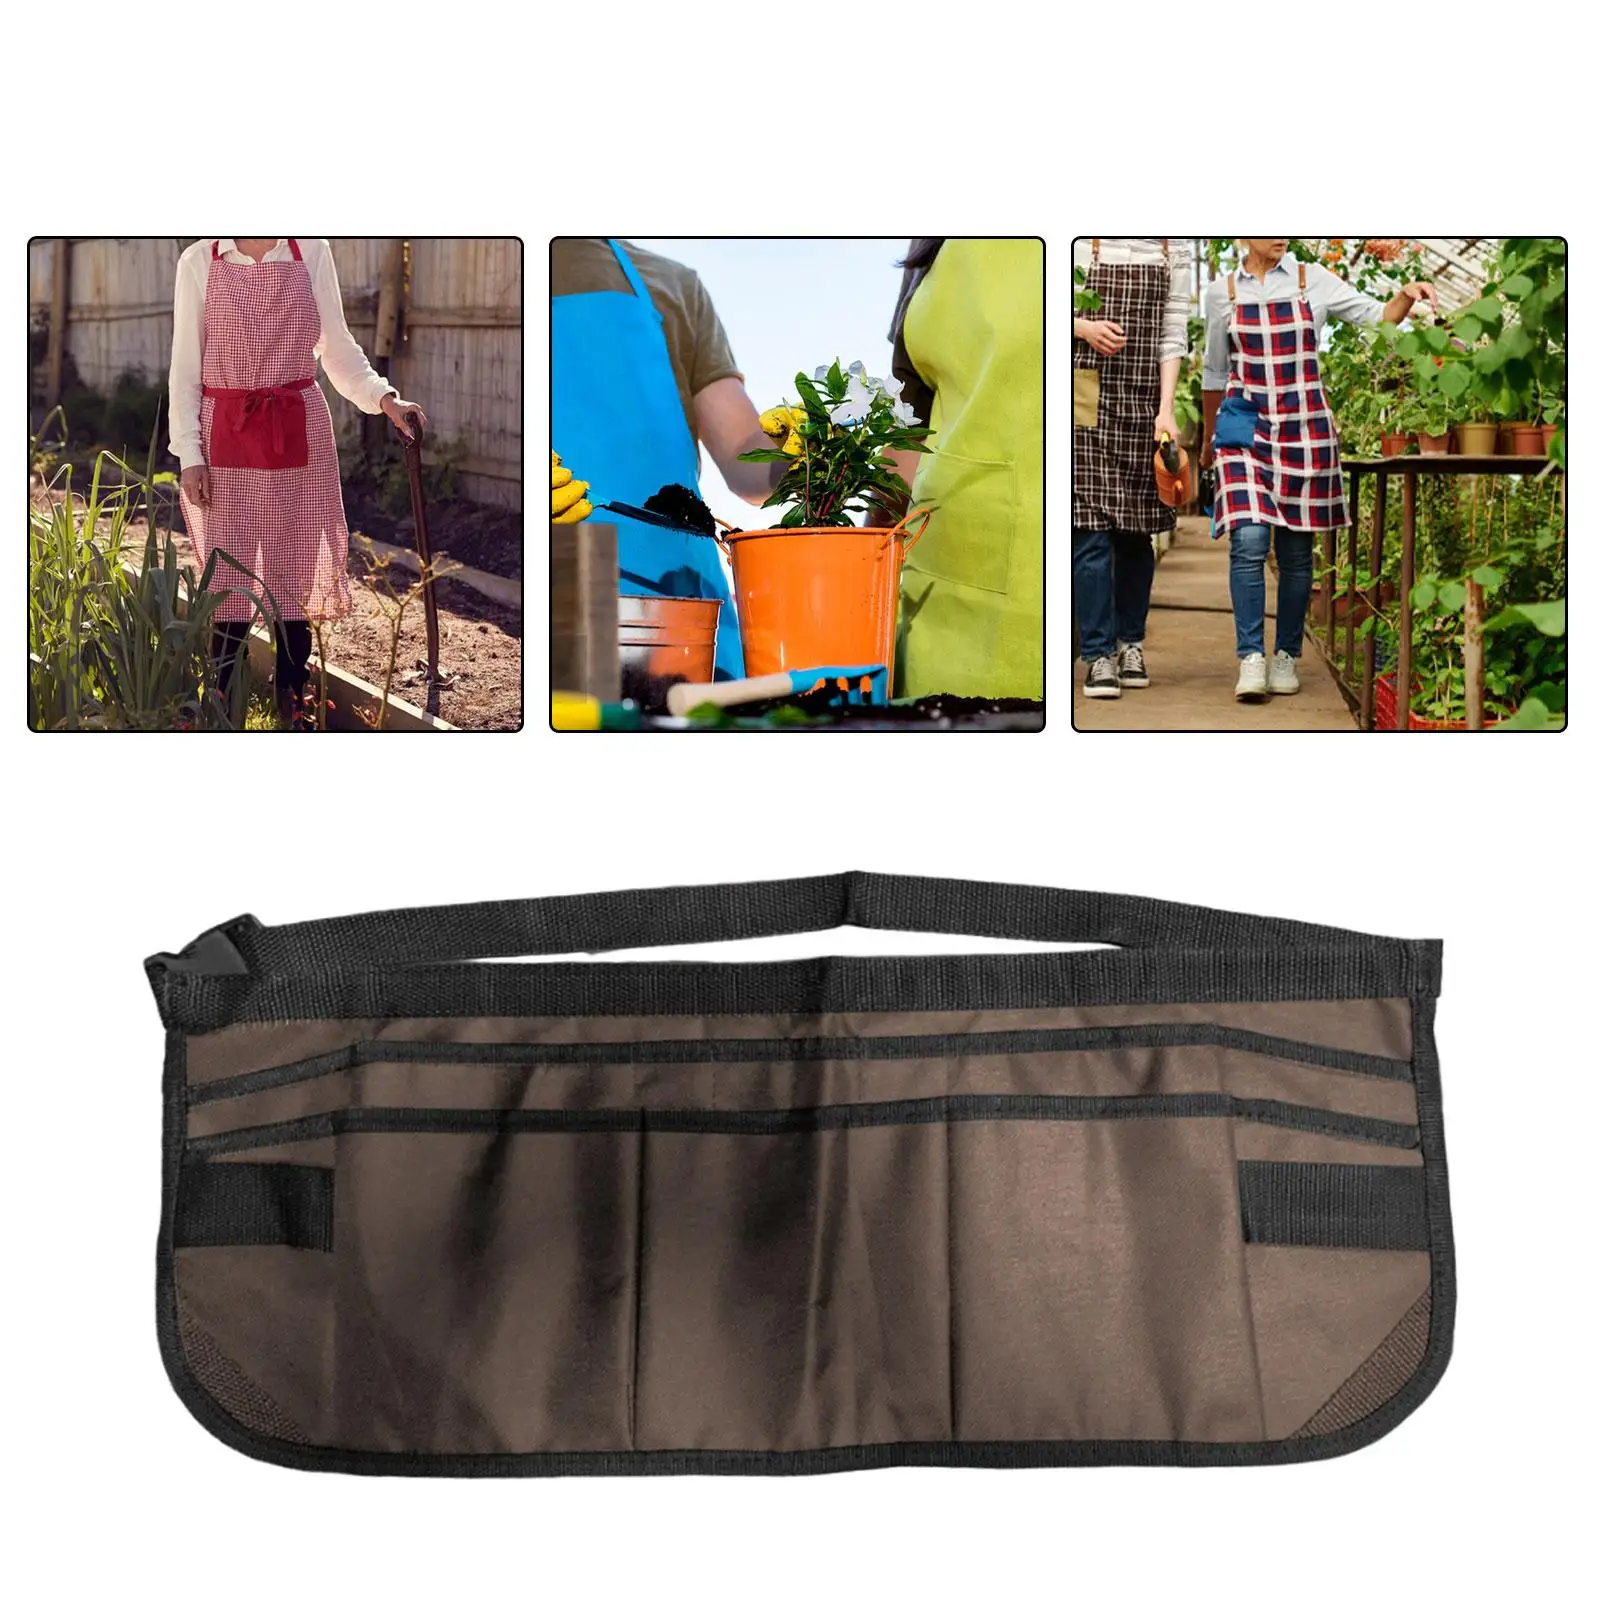 Apron with Tool Pockets Unisex Adjustable Waist Belt Portable Multifunctional for Planting Harvesting Work Gardening Carpenter